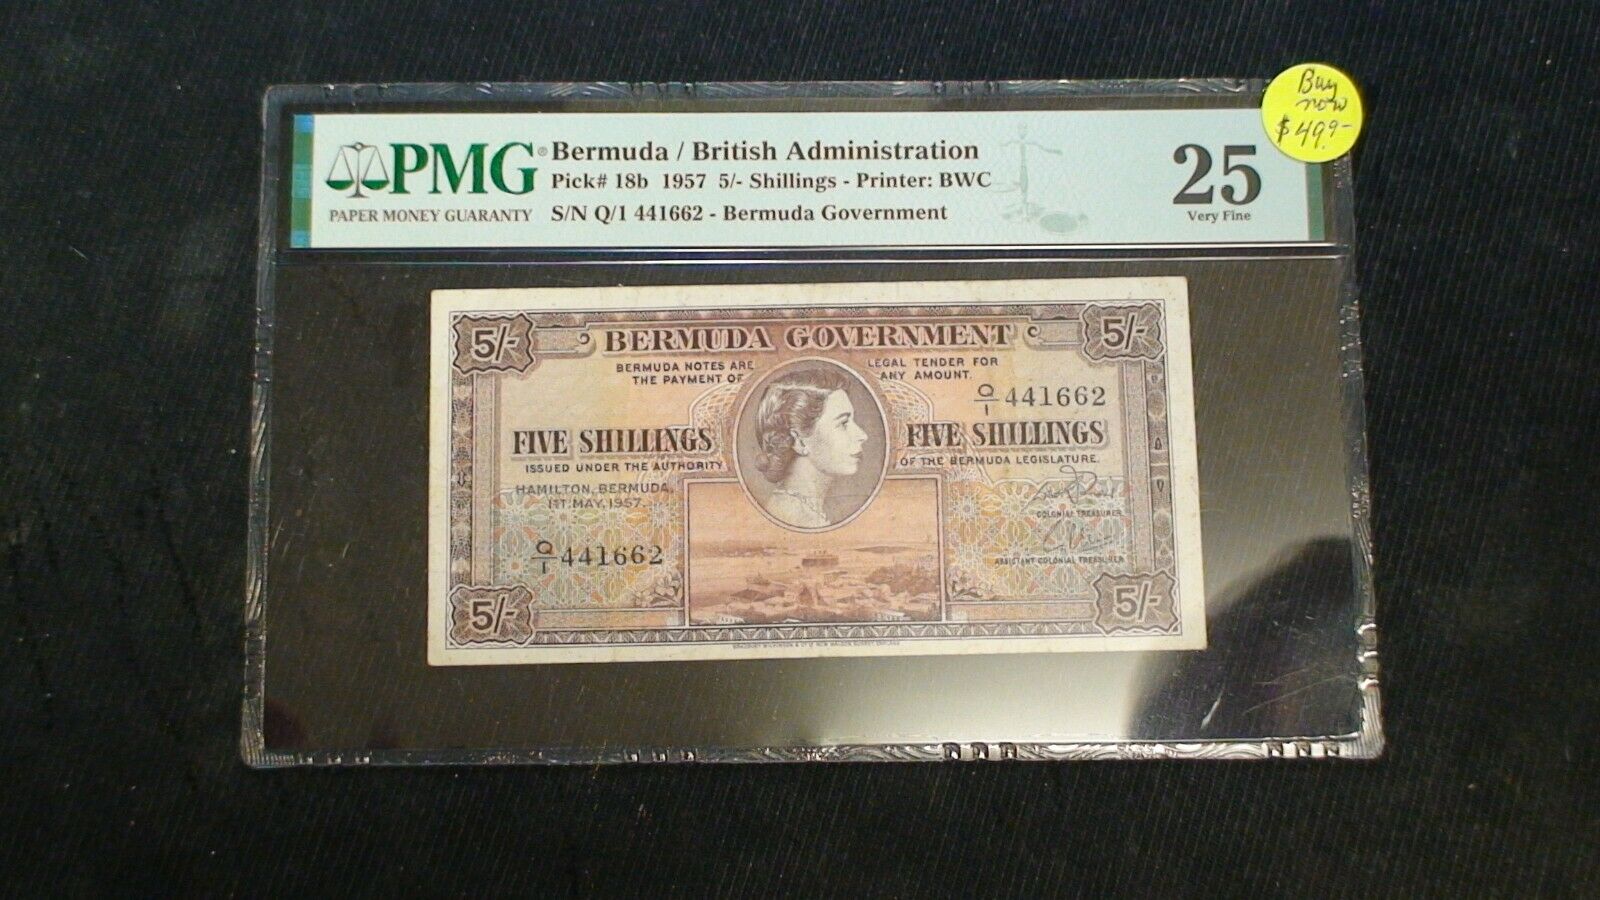 1957 Bermuda / British Admin Pmg Vf25 Five Shillings Note 4s Bill Buy It Now!